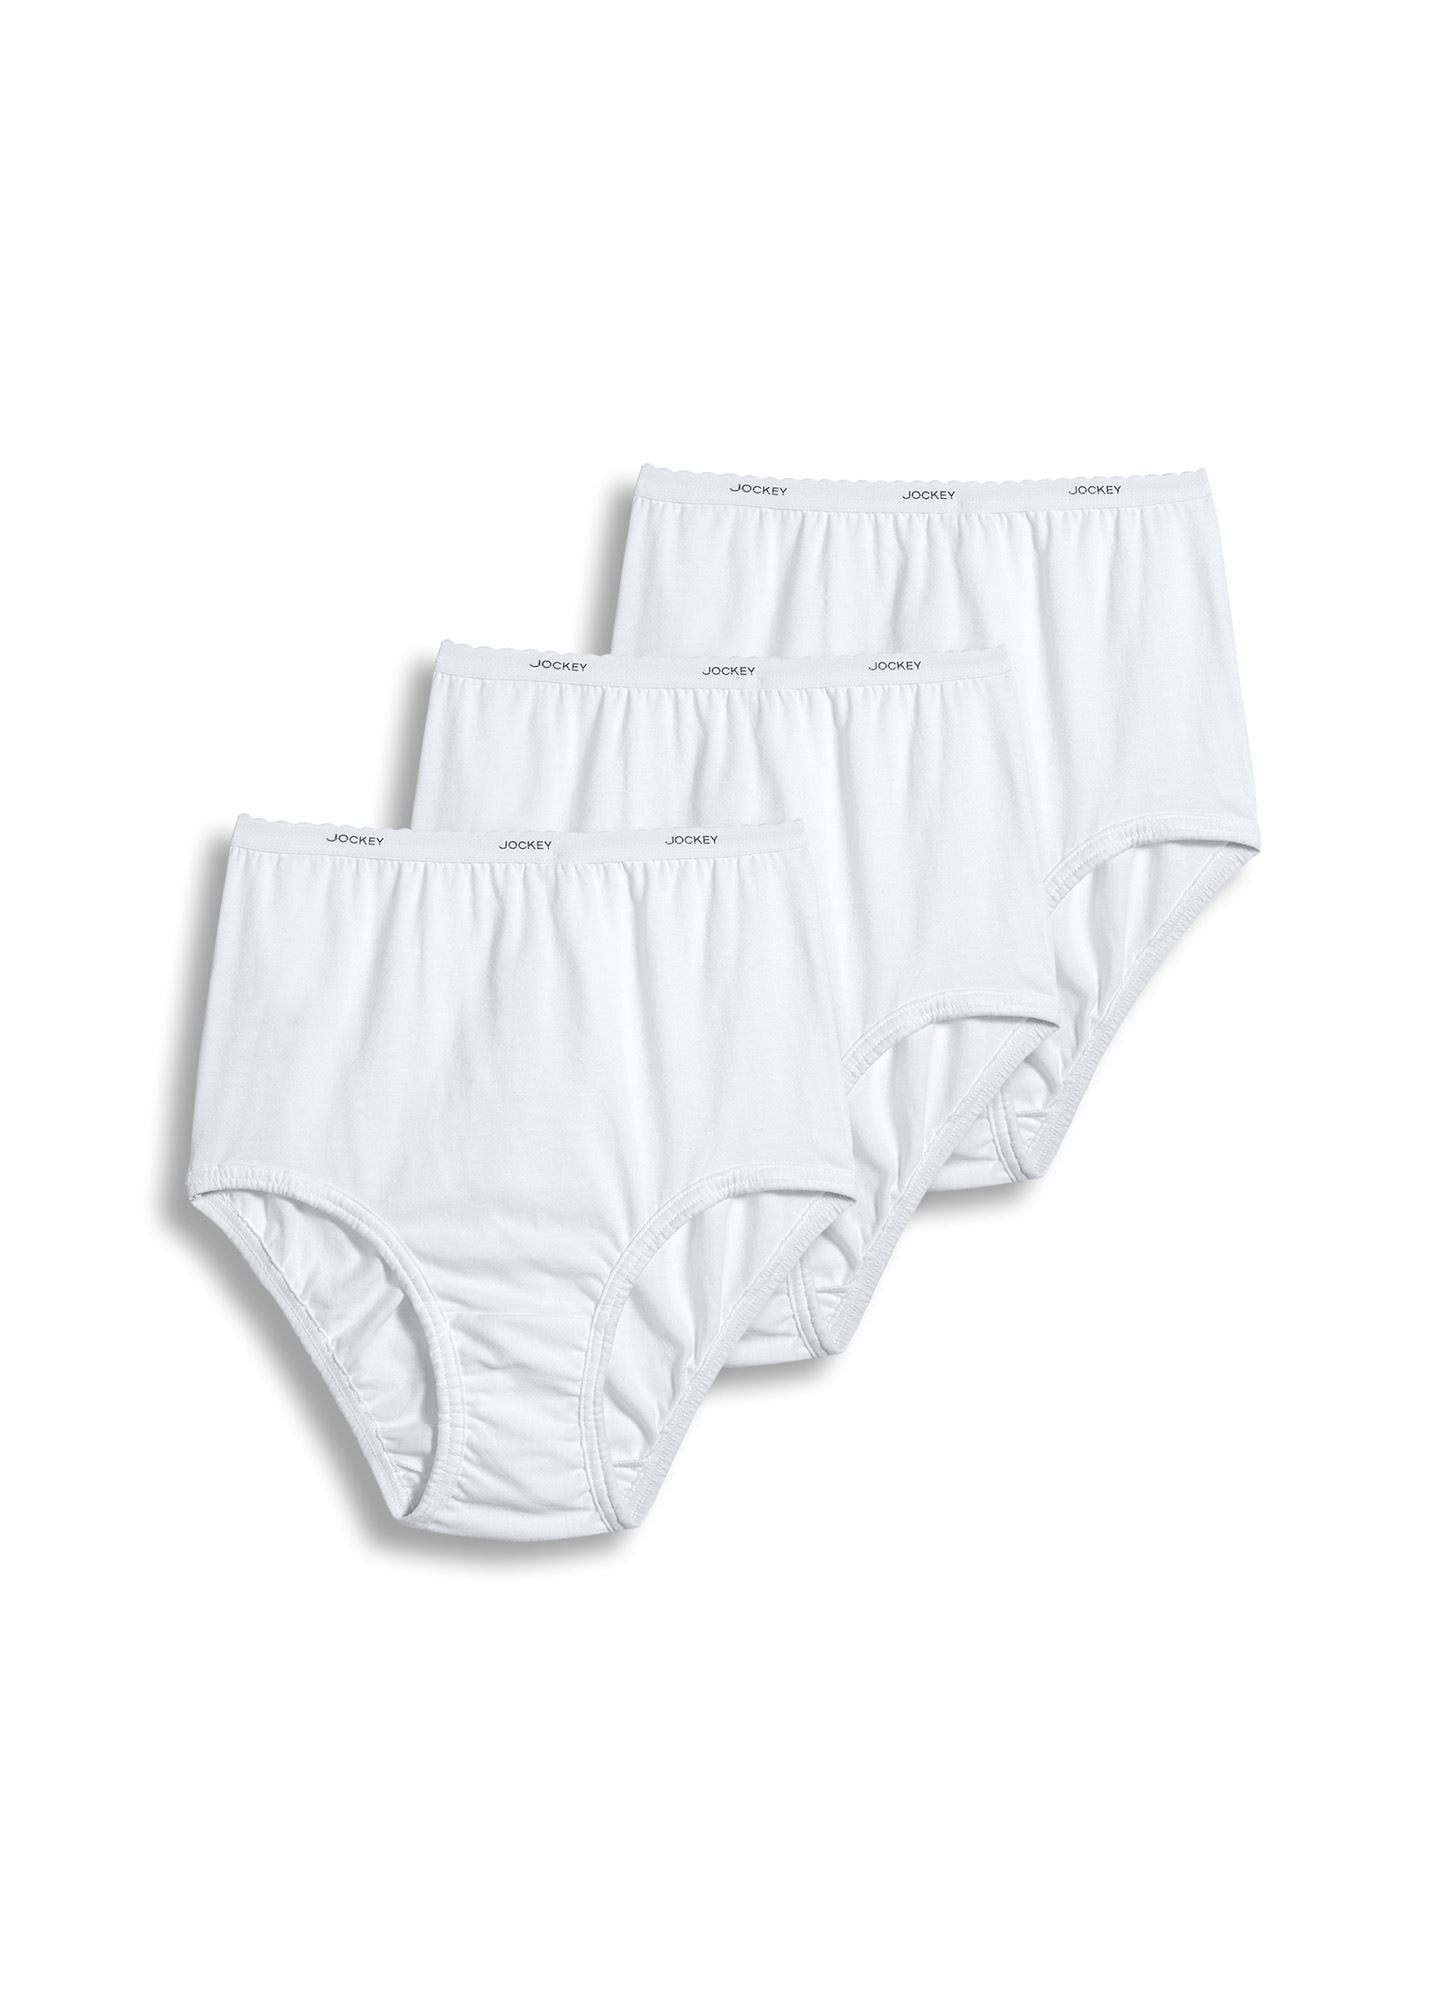 Jockey® Essentials Girls' Cotton Stretch Brief Panty - 3 Pack, Sizes S-XL ( 6-16) 